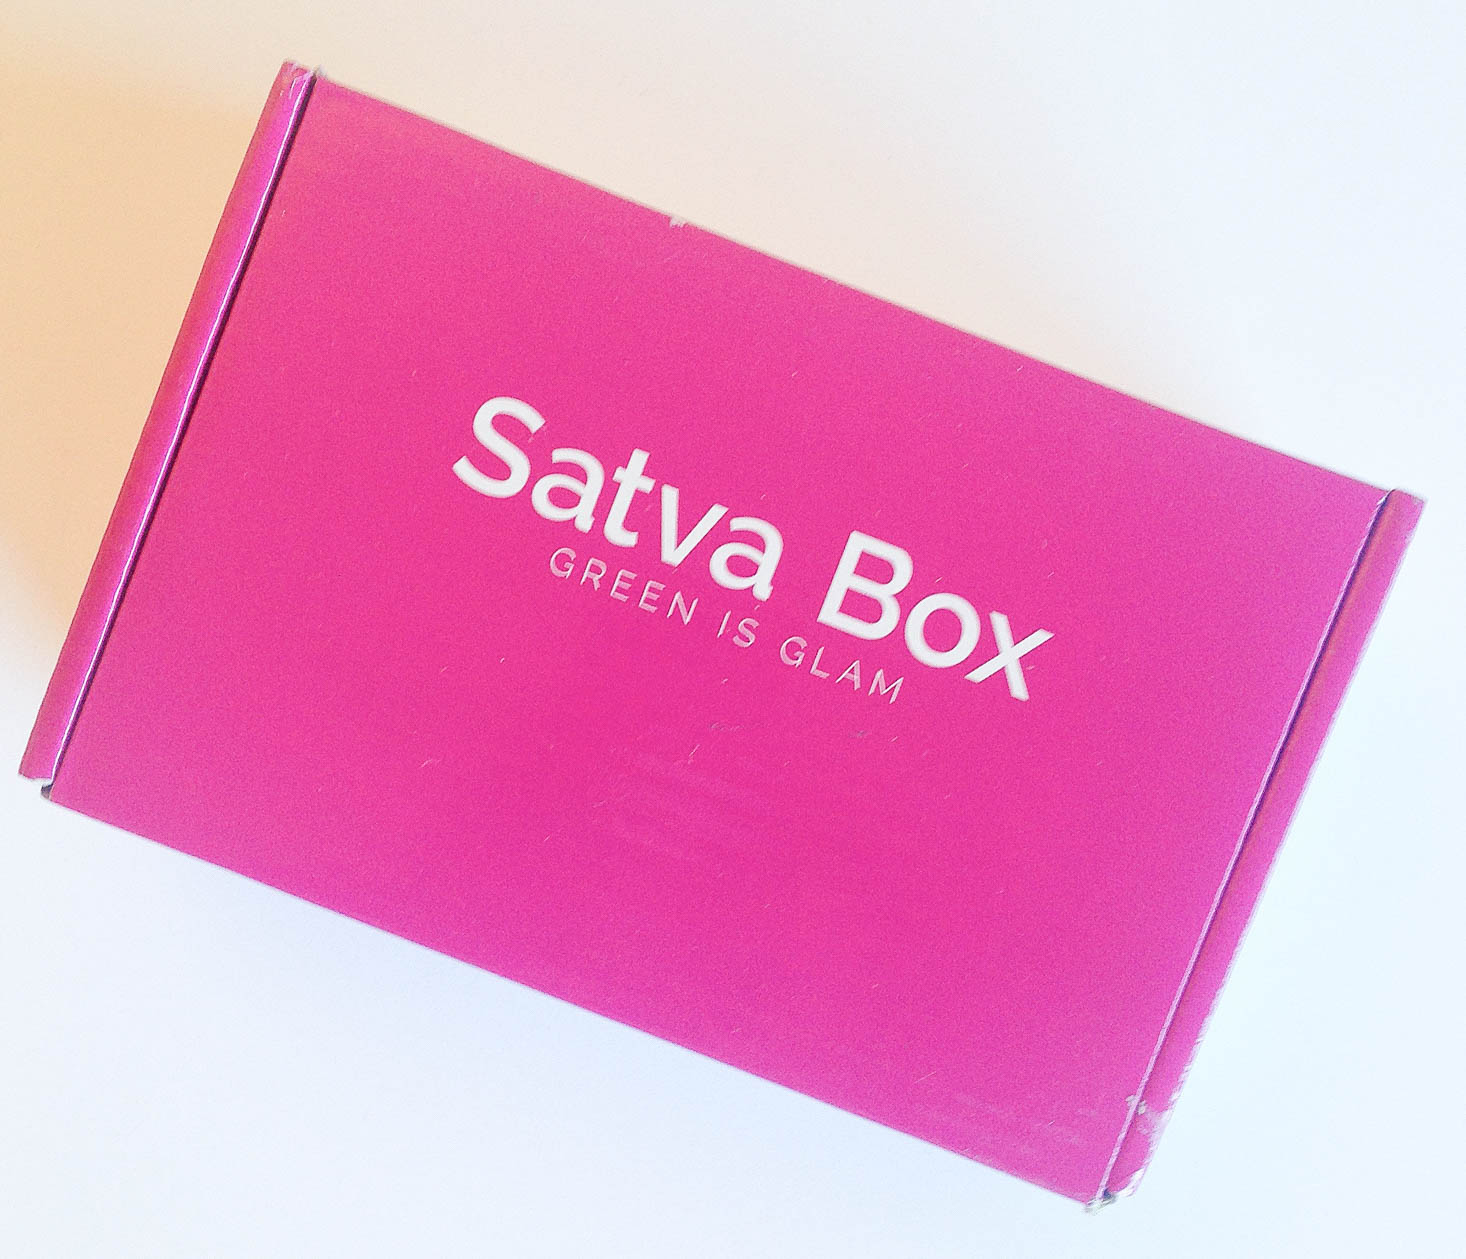 Satva Natural Beauty Box Review + Coupon – February 2017